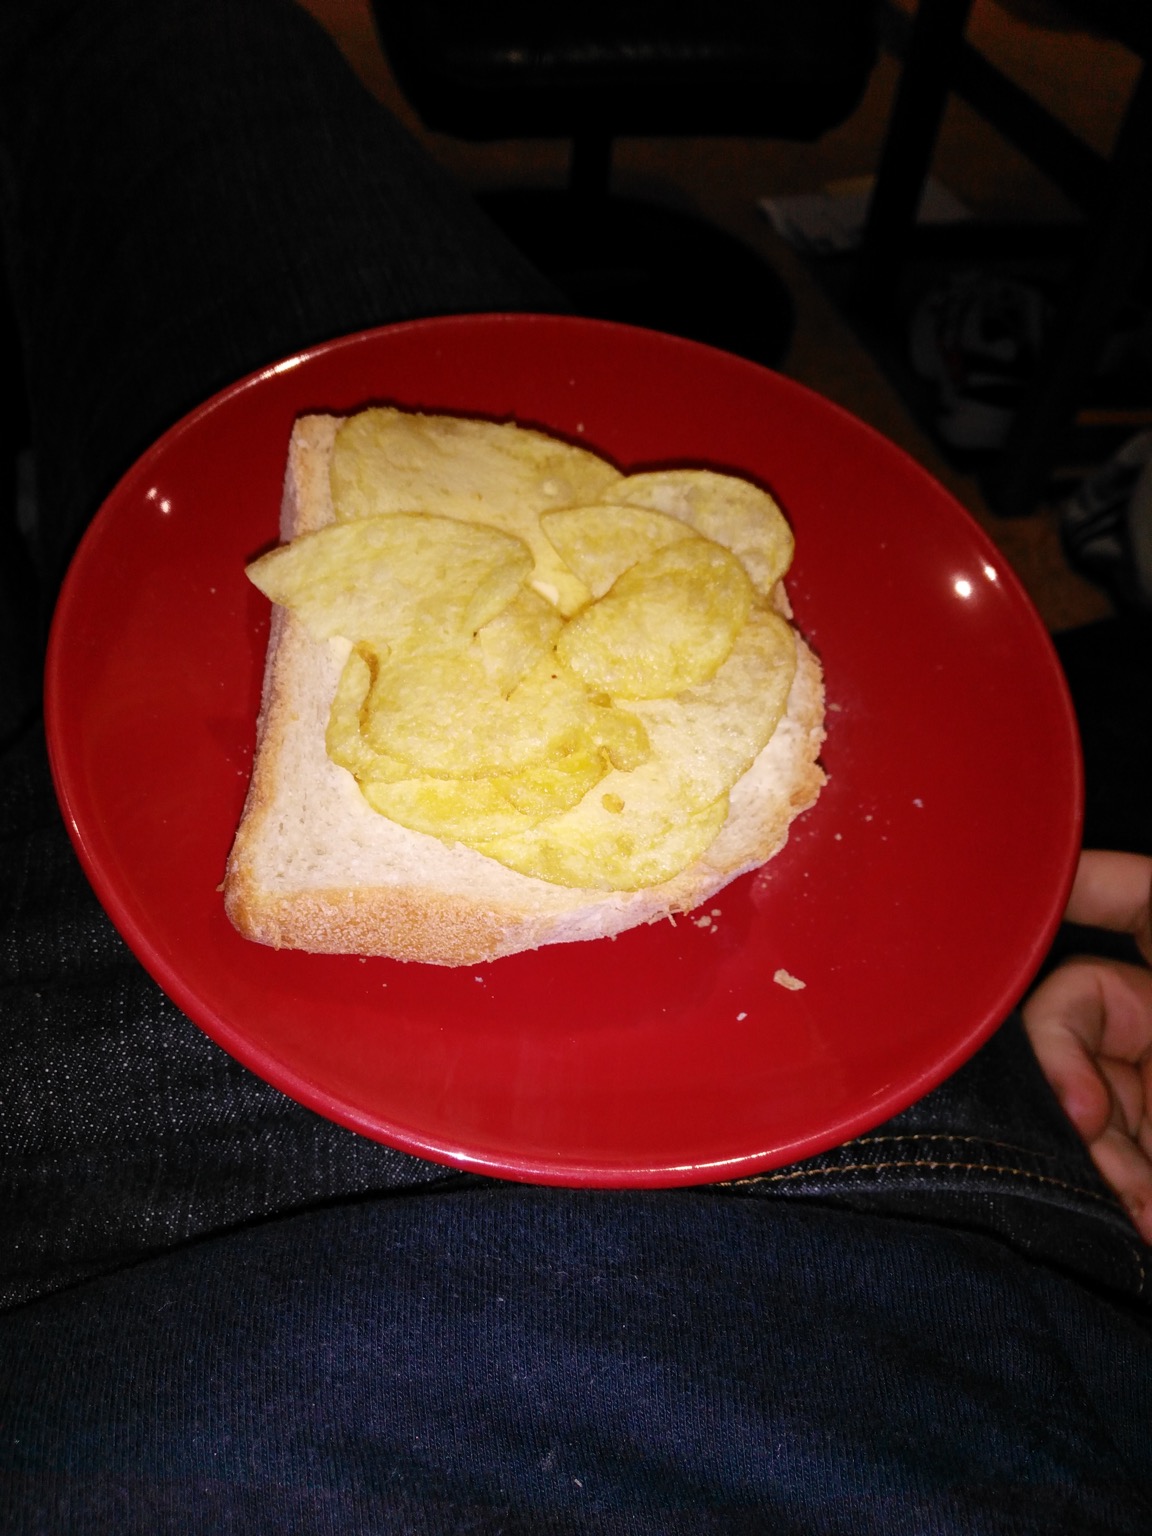 Flash photo of potato crisps on sliced white bread